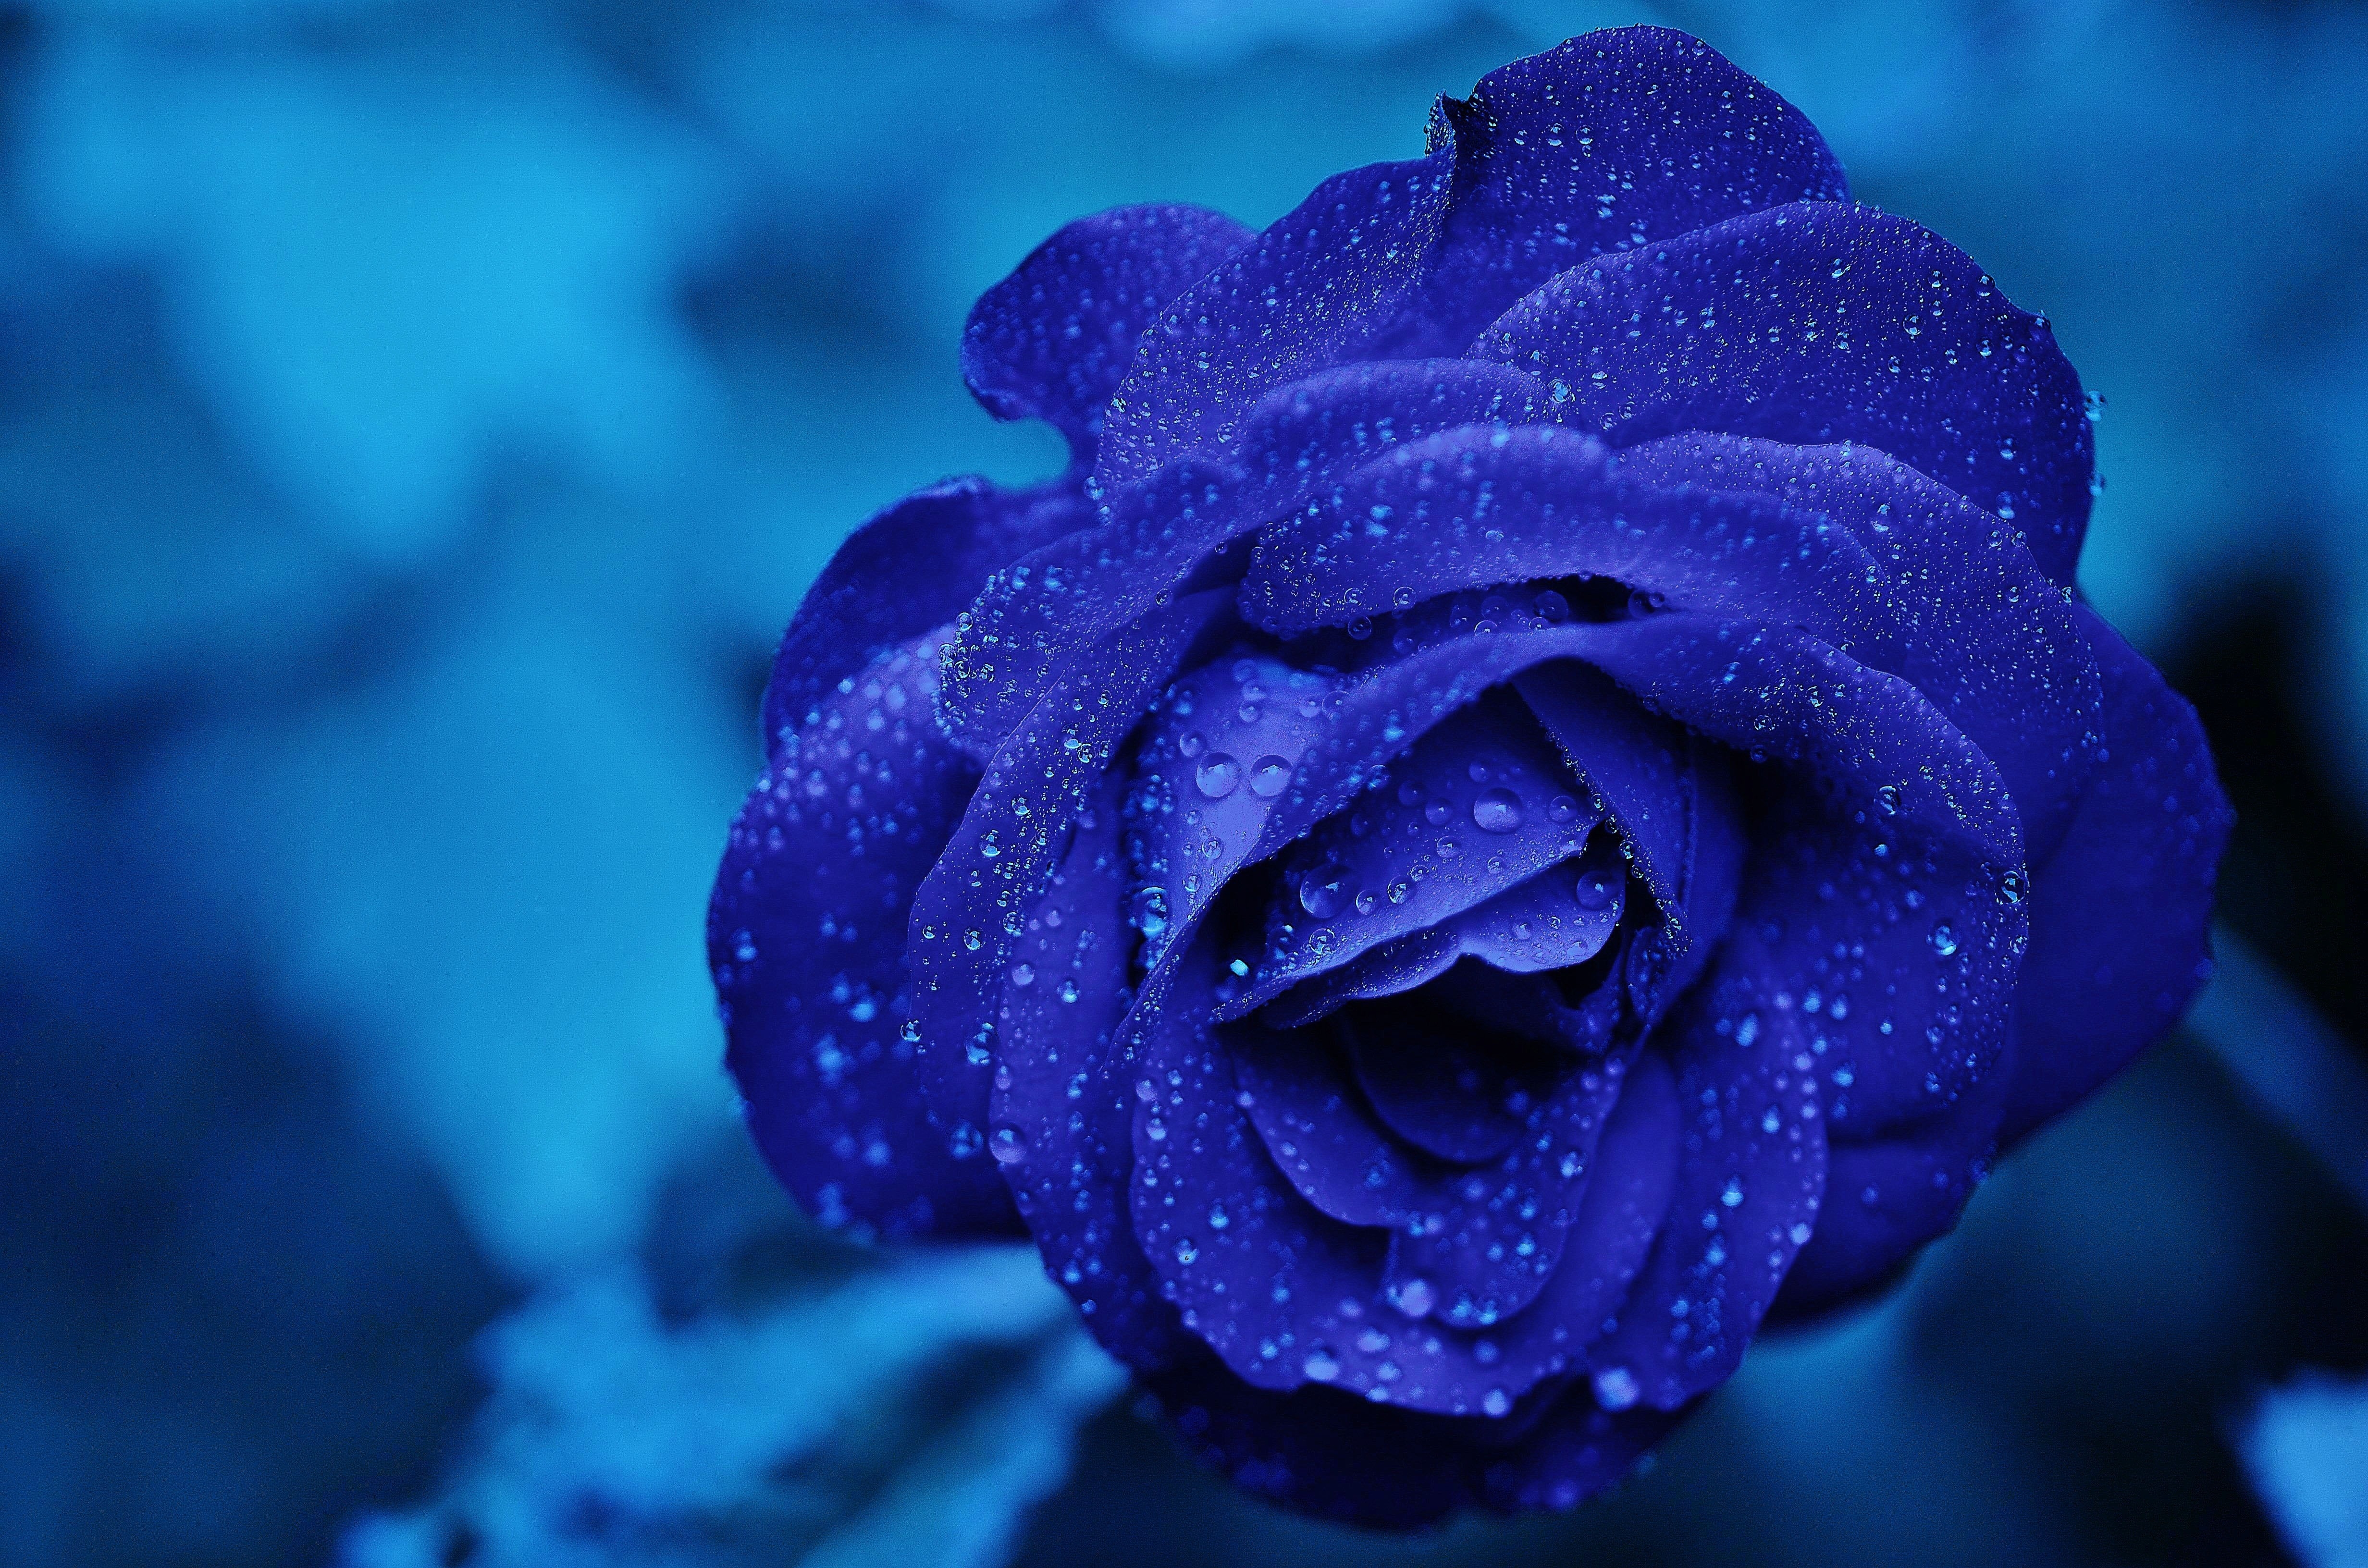 Wallpapers rose blue rose flower on the desktop